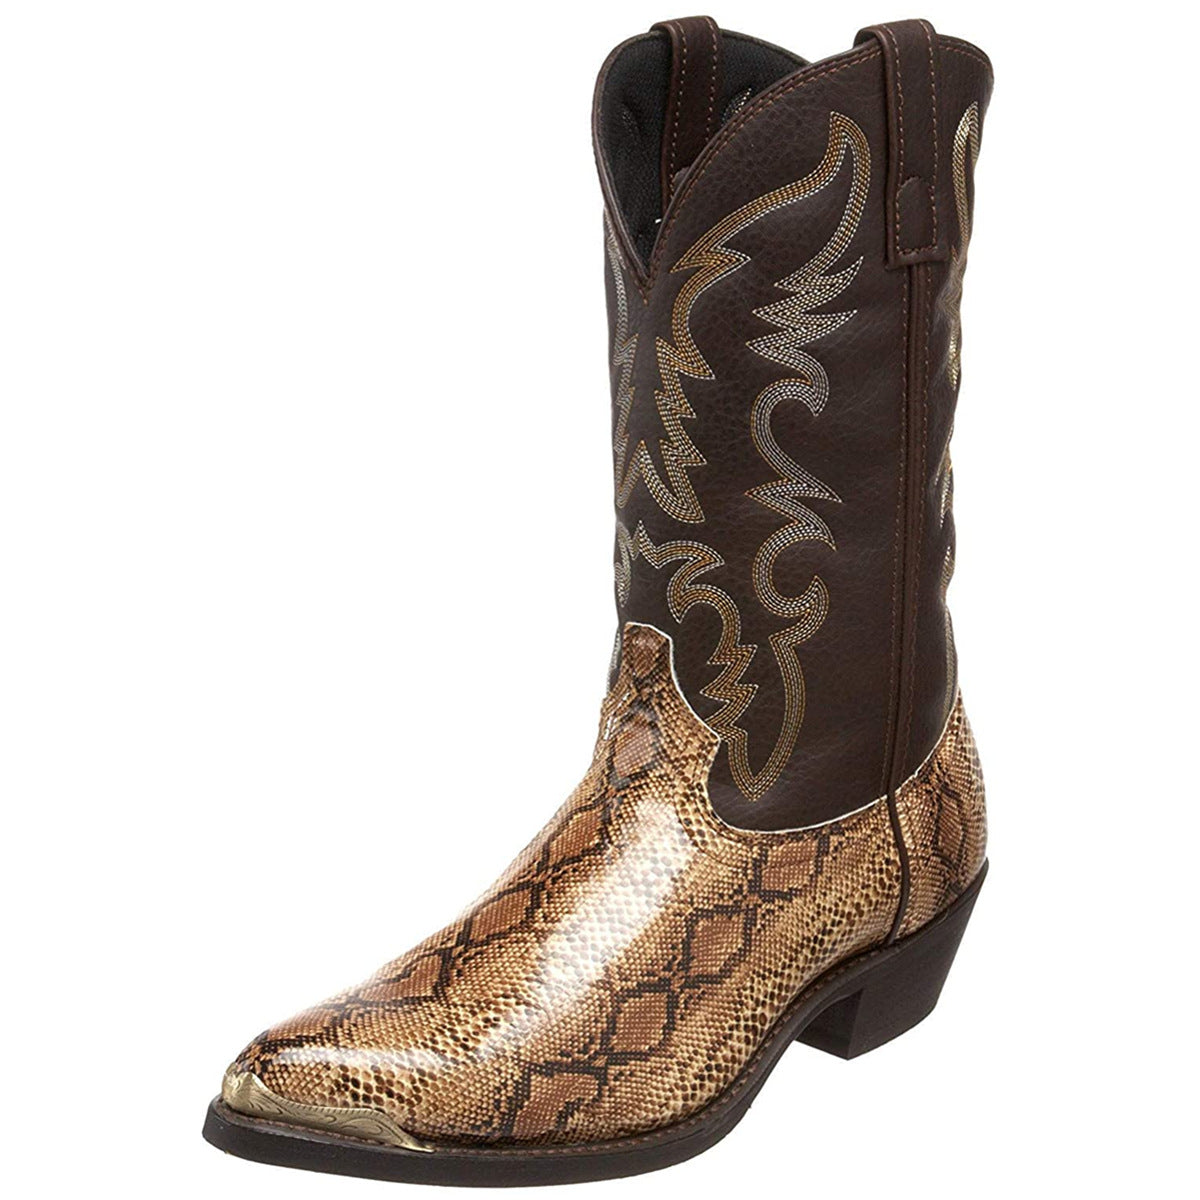 High-Heeled Iron Head Cowboy Boots Couples Crocs Snake Print Boots